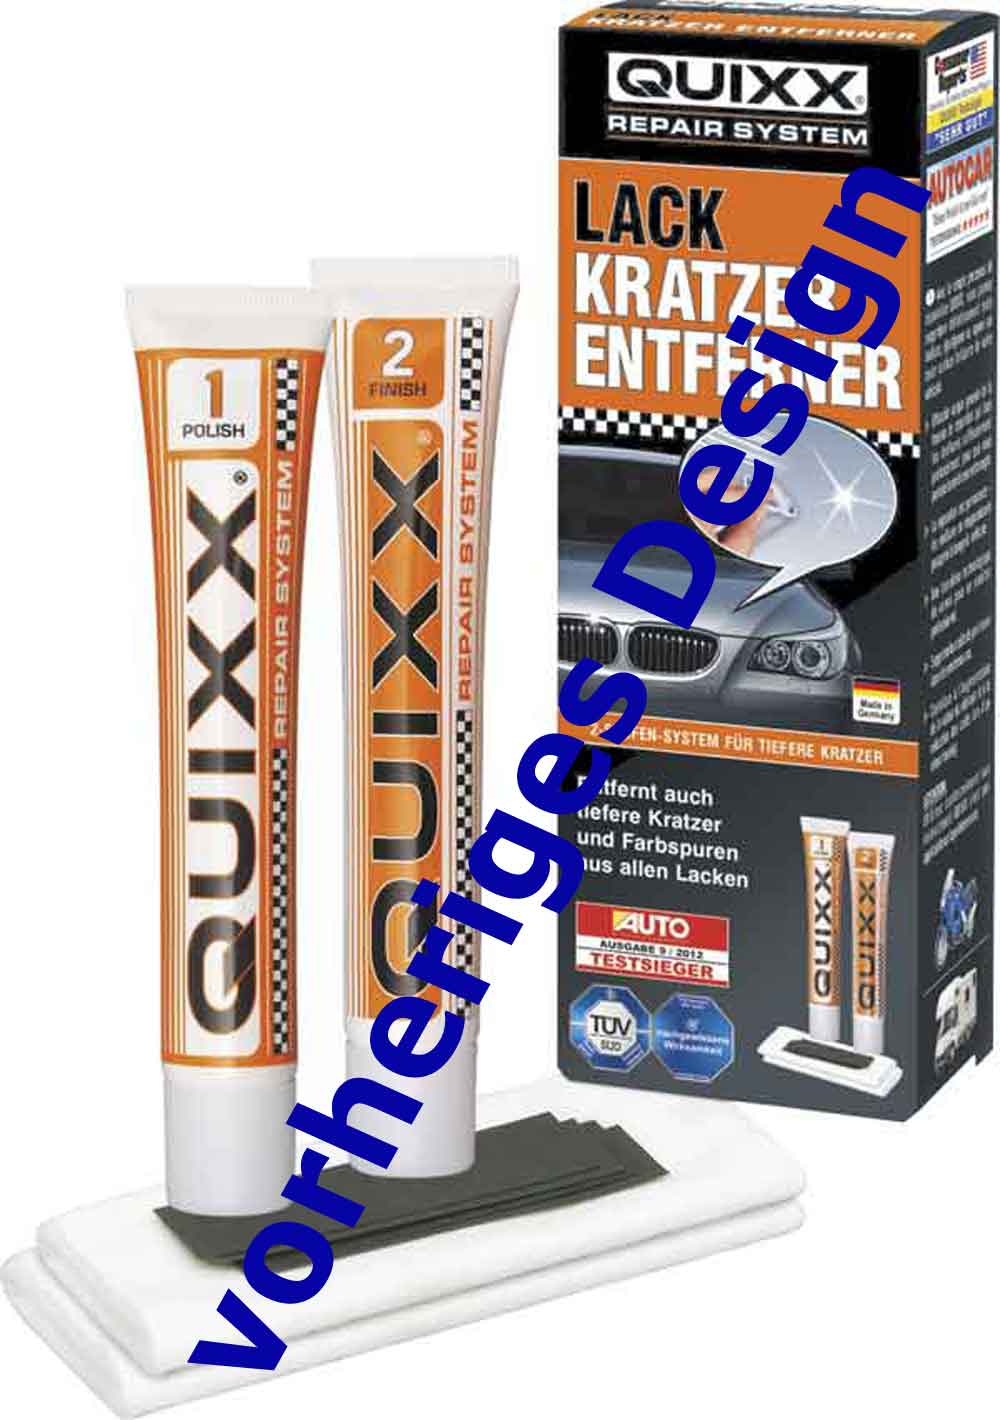 Quixx Lack Kratzer Entferner Set 50253